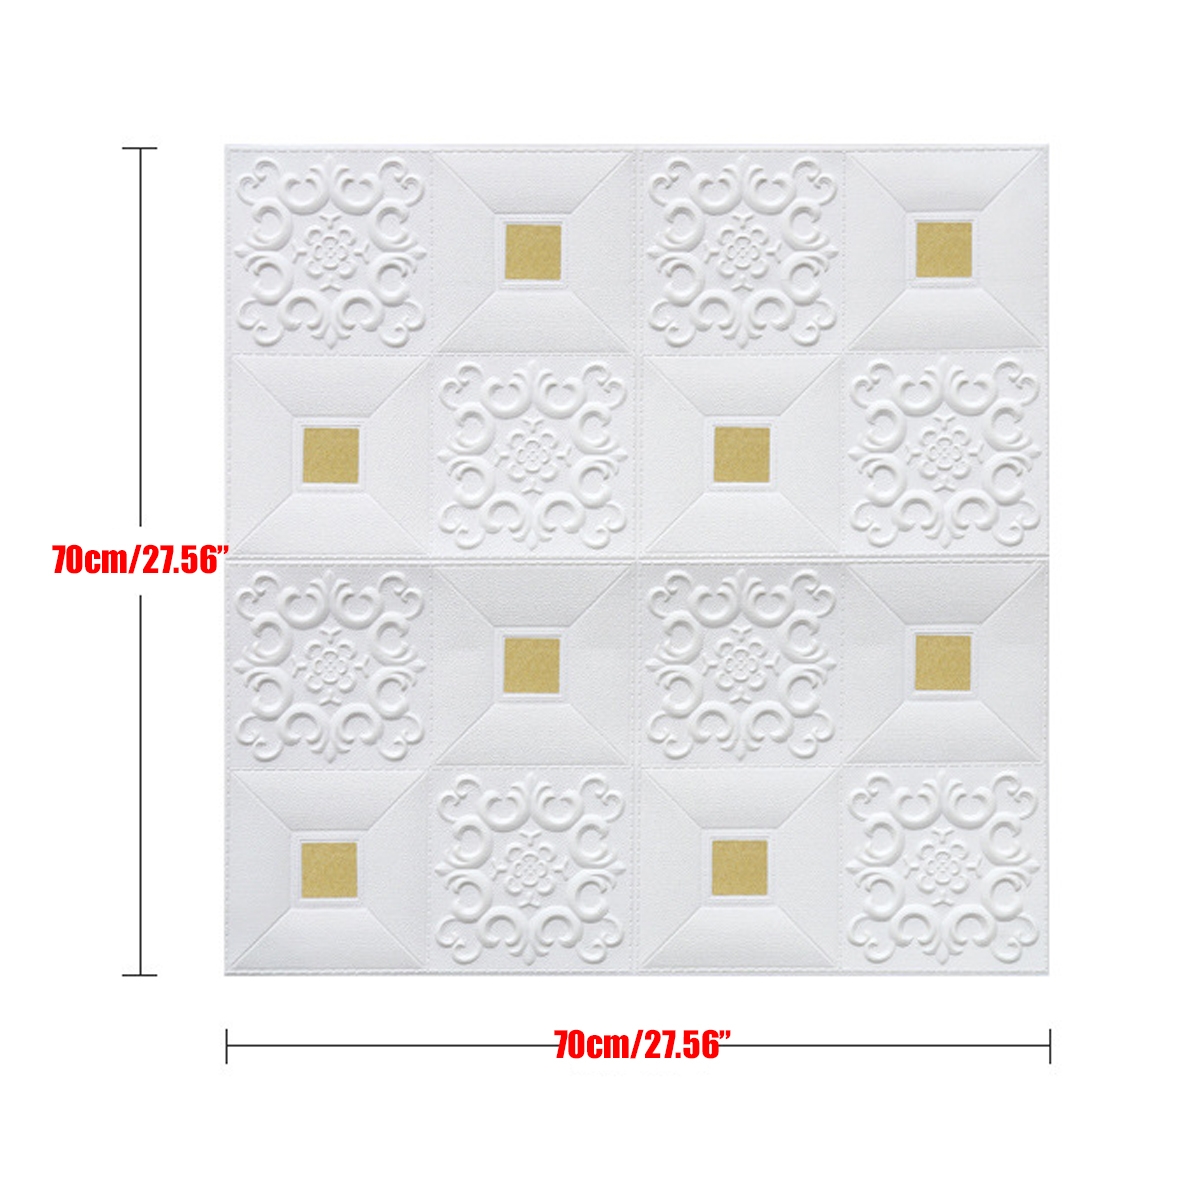 10PCS 3D Stereo Wall Self-Adhesive Ceiling Decorative Bricks